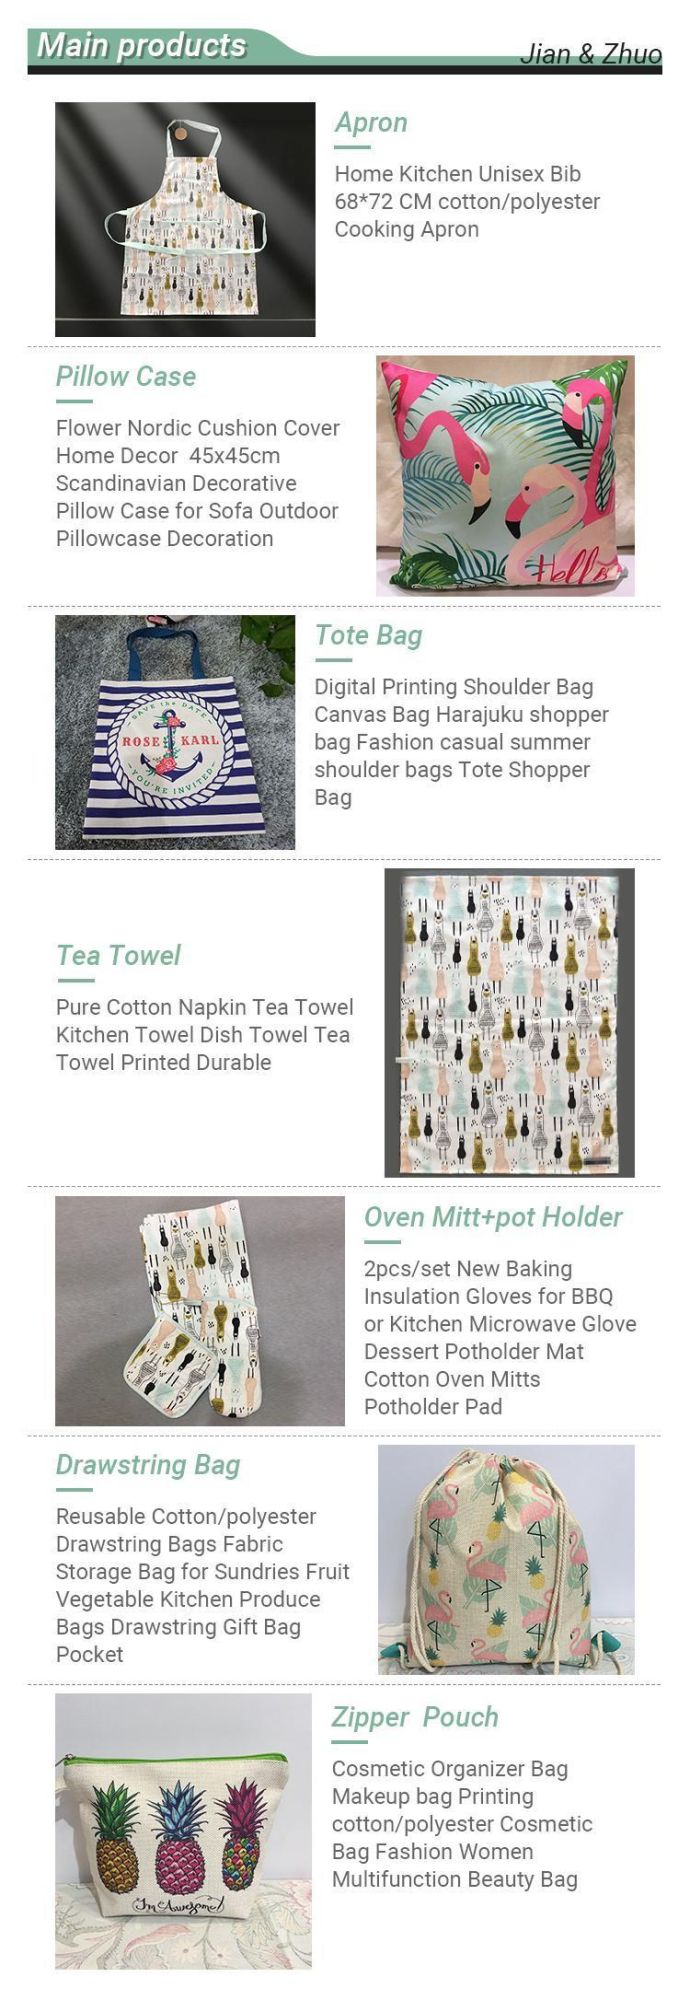 Custom Digital Printing Flower Polyester Cushion Pillow Household Textiles